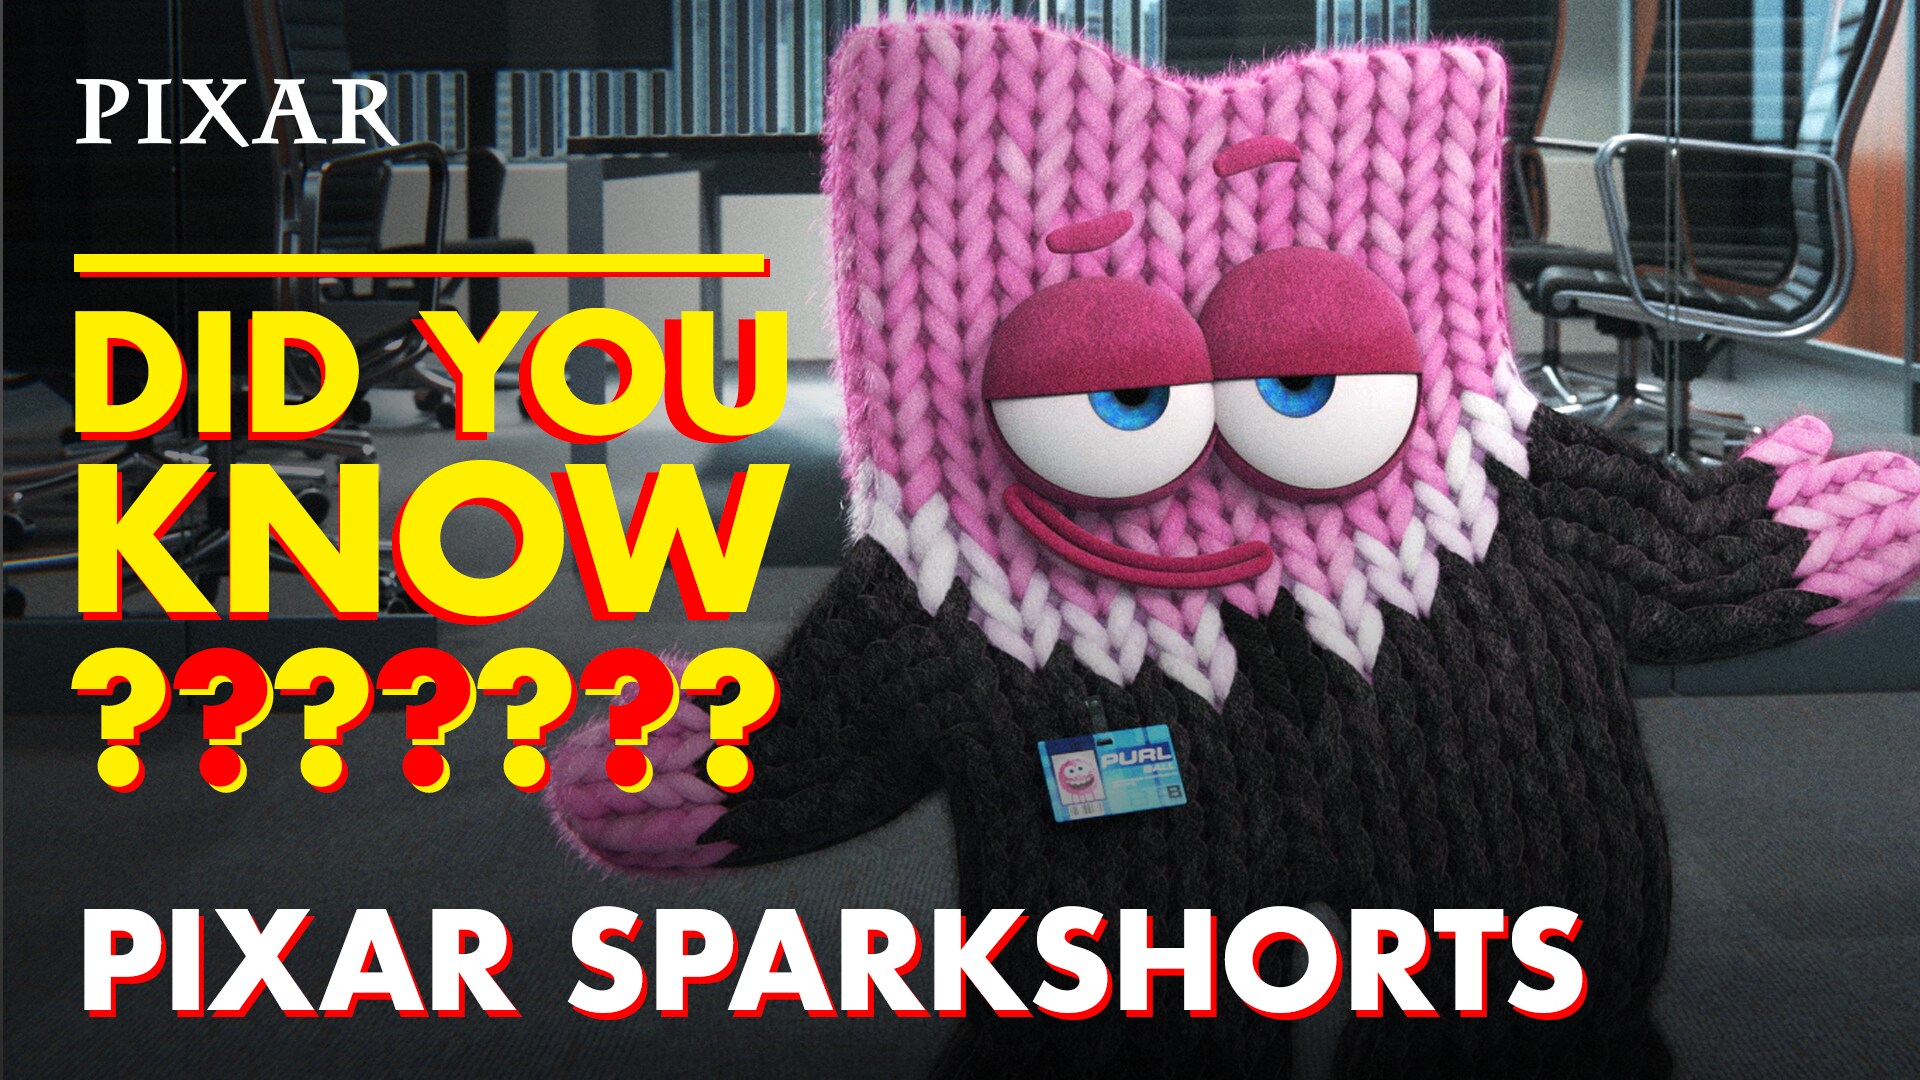 SparkShorts | Pixar Did You Know?